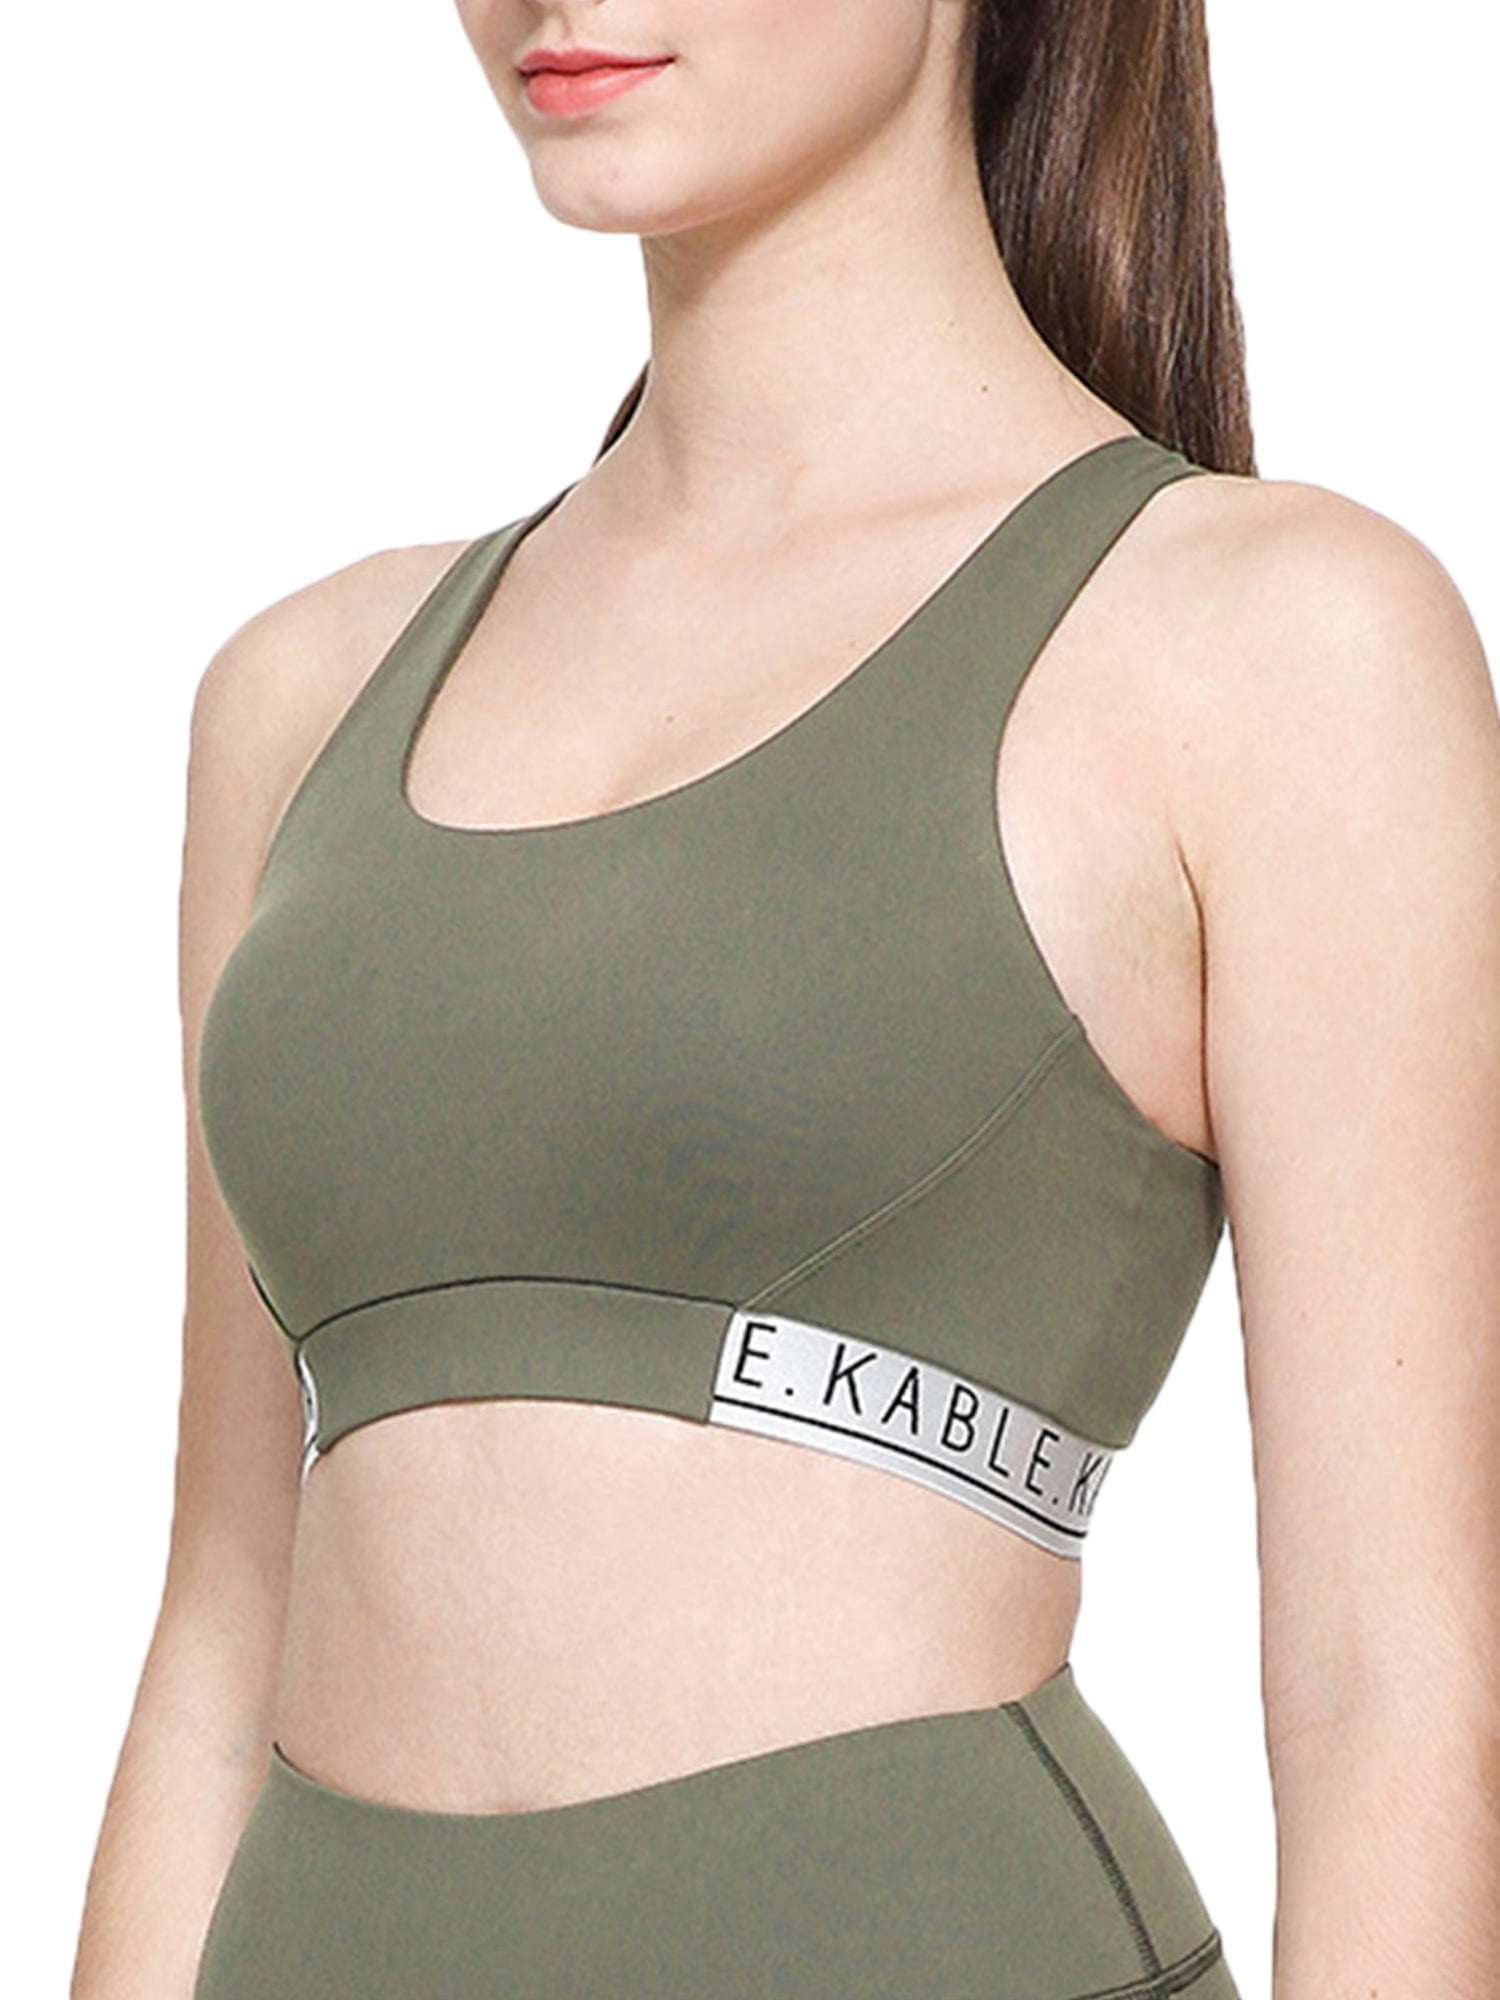 Lattice Yoga Sports Bra Padded Top Wireless Key Hole Women Athletic Vest Corsets 